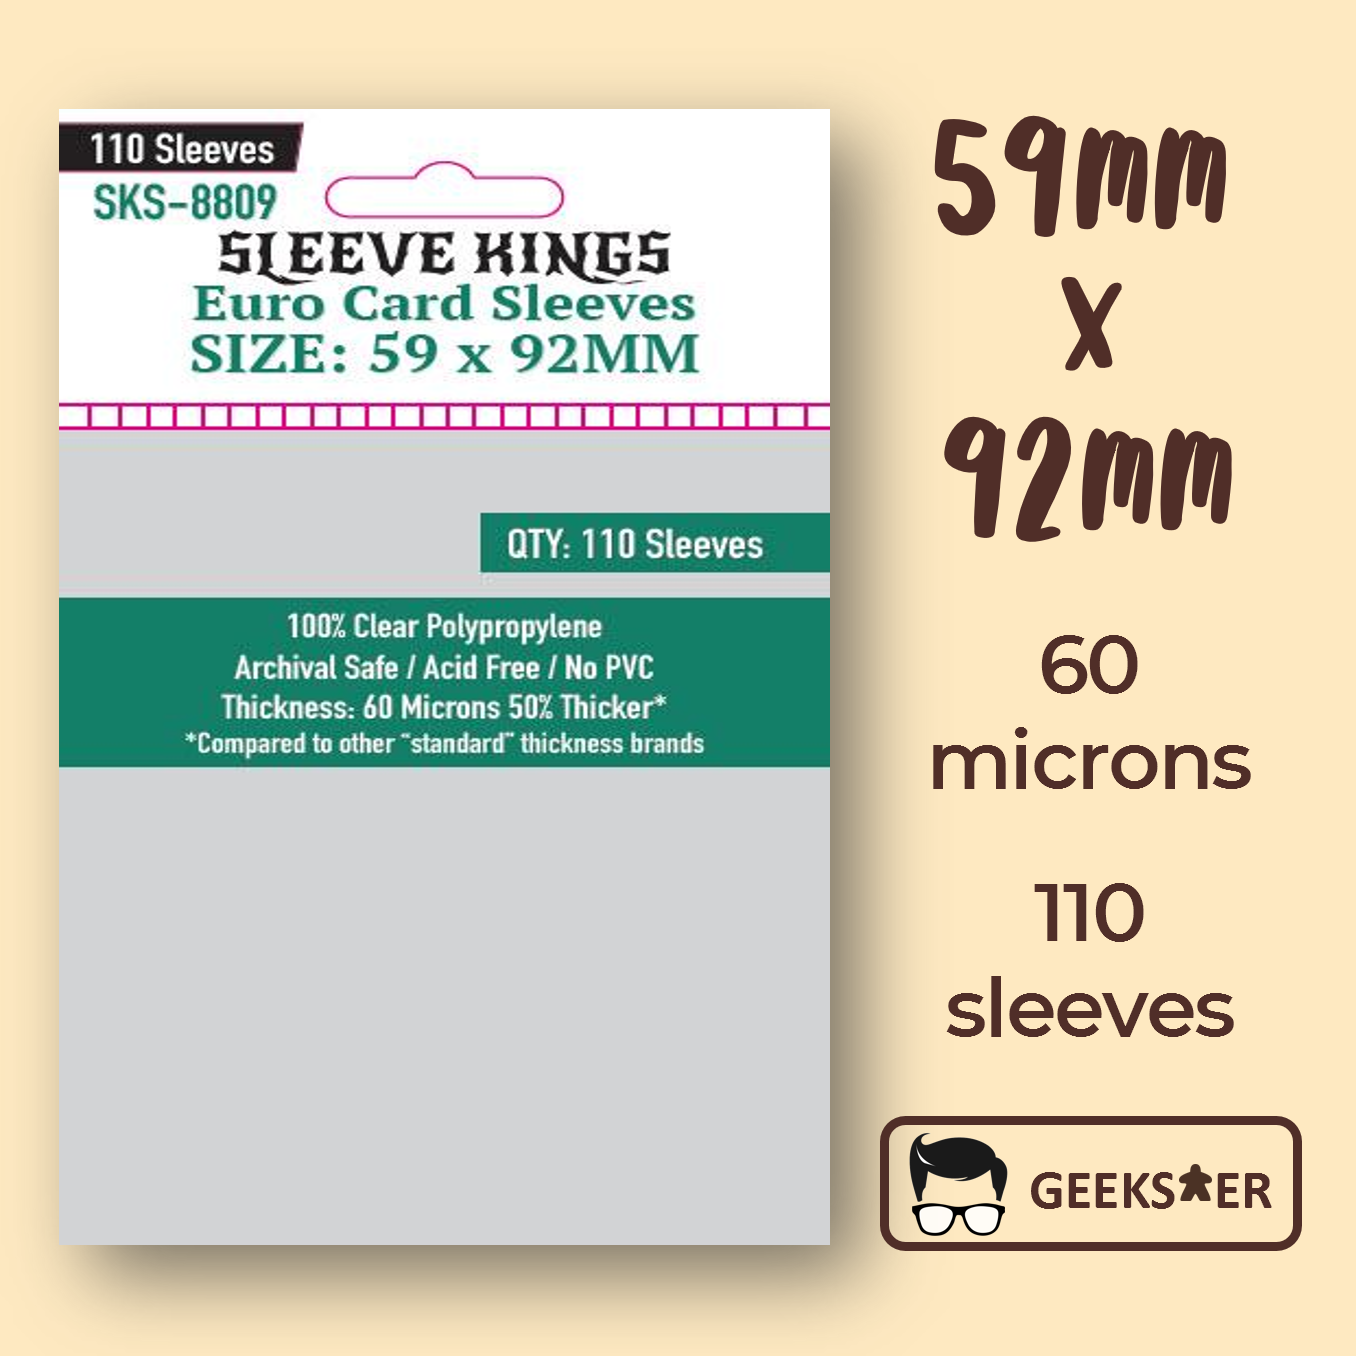 [59 X 92mm] 8809 Sleeve Kings Euro